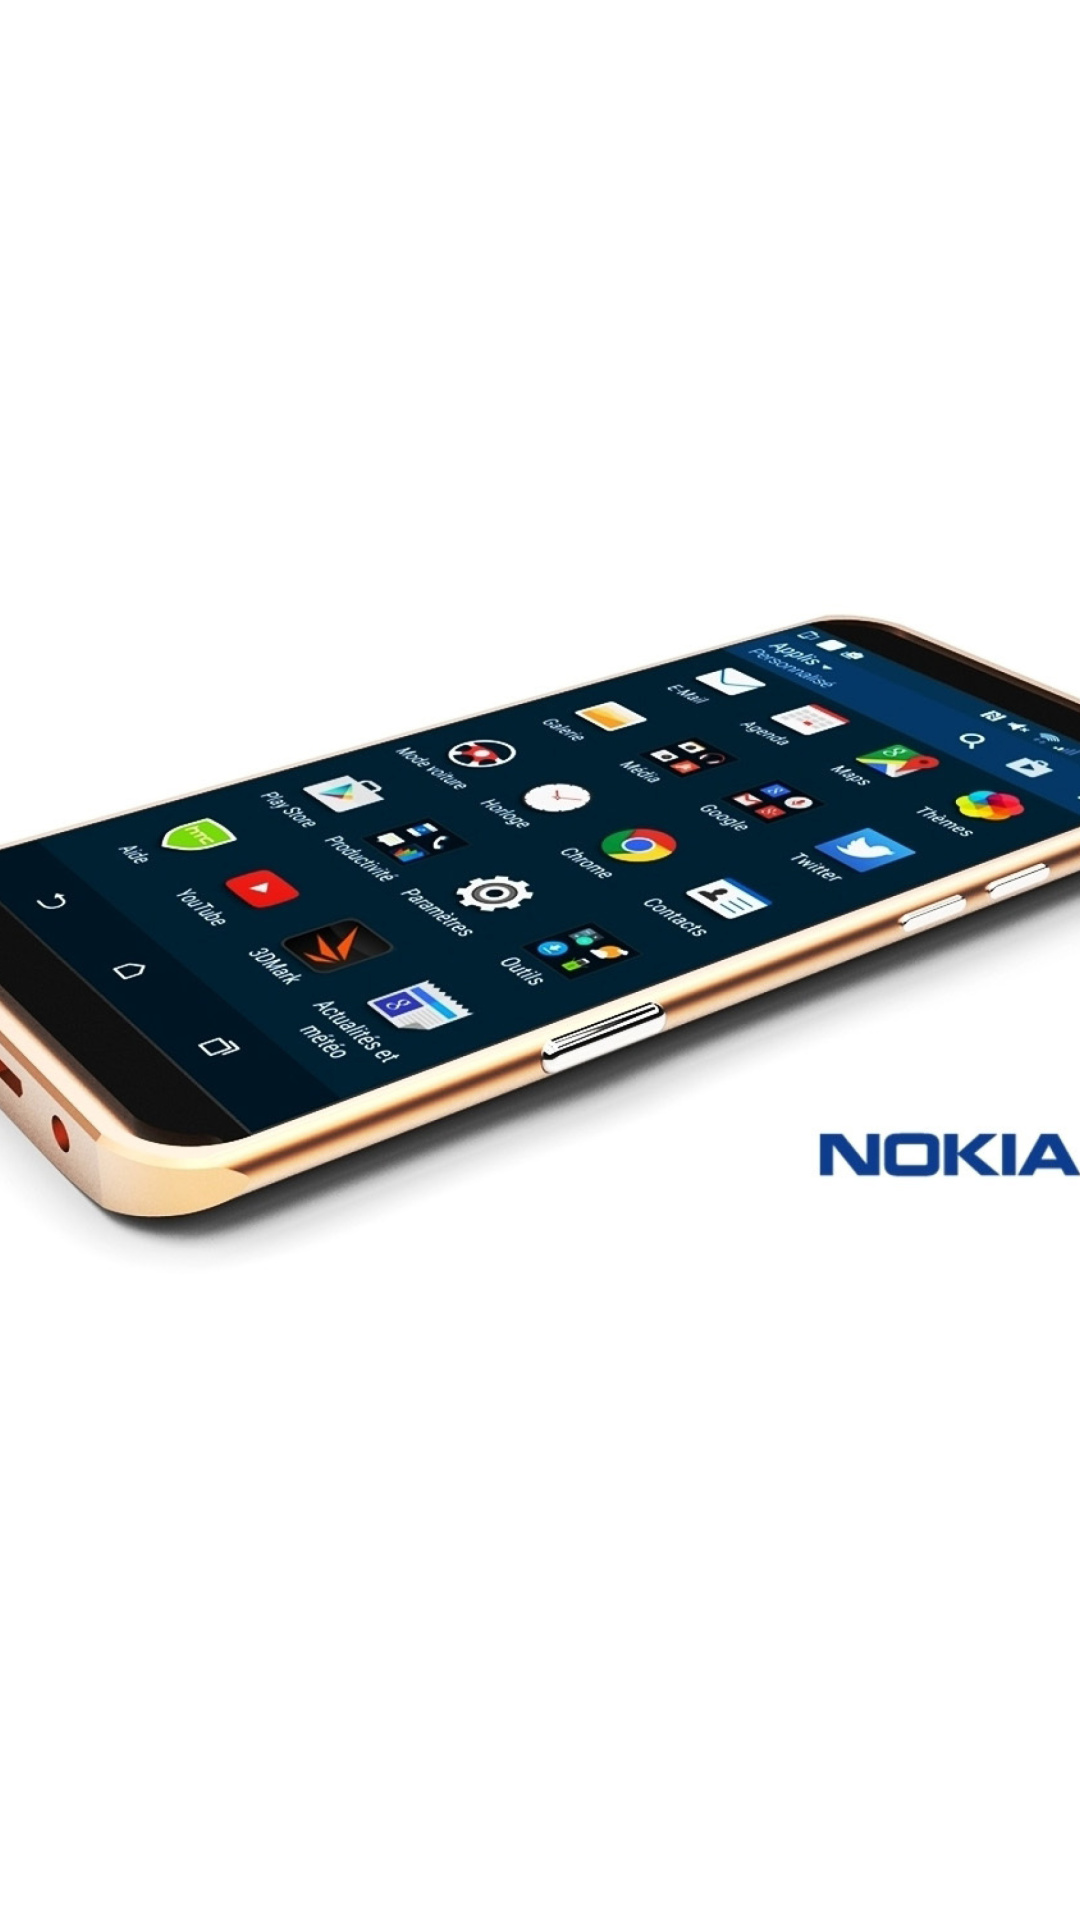 Обои Android Nokia A1 1080x1920